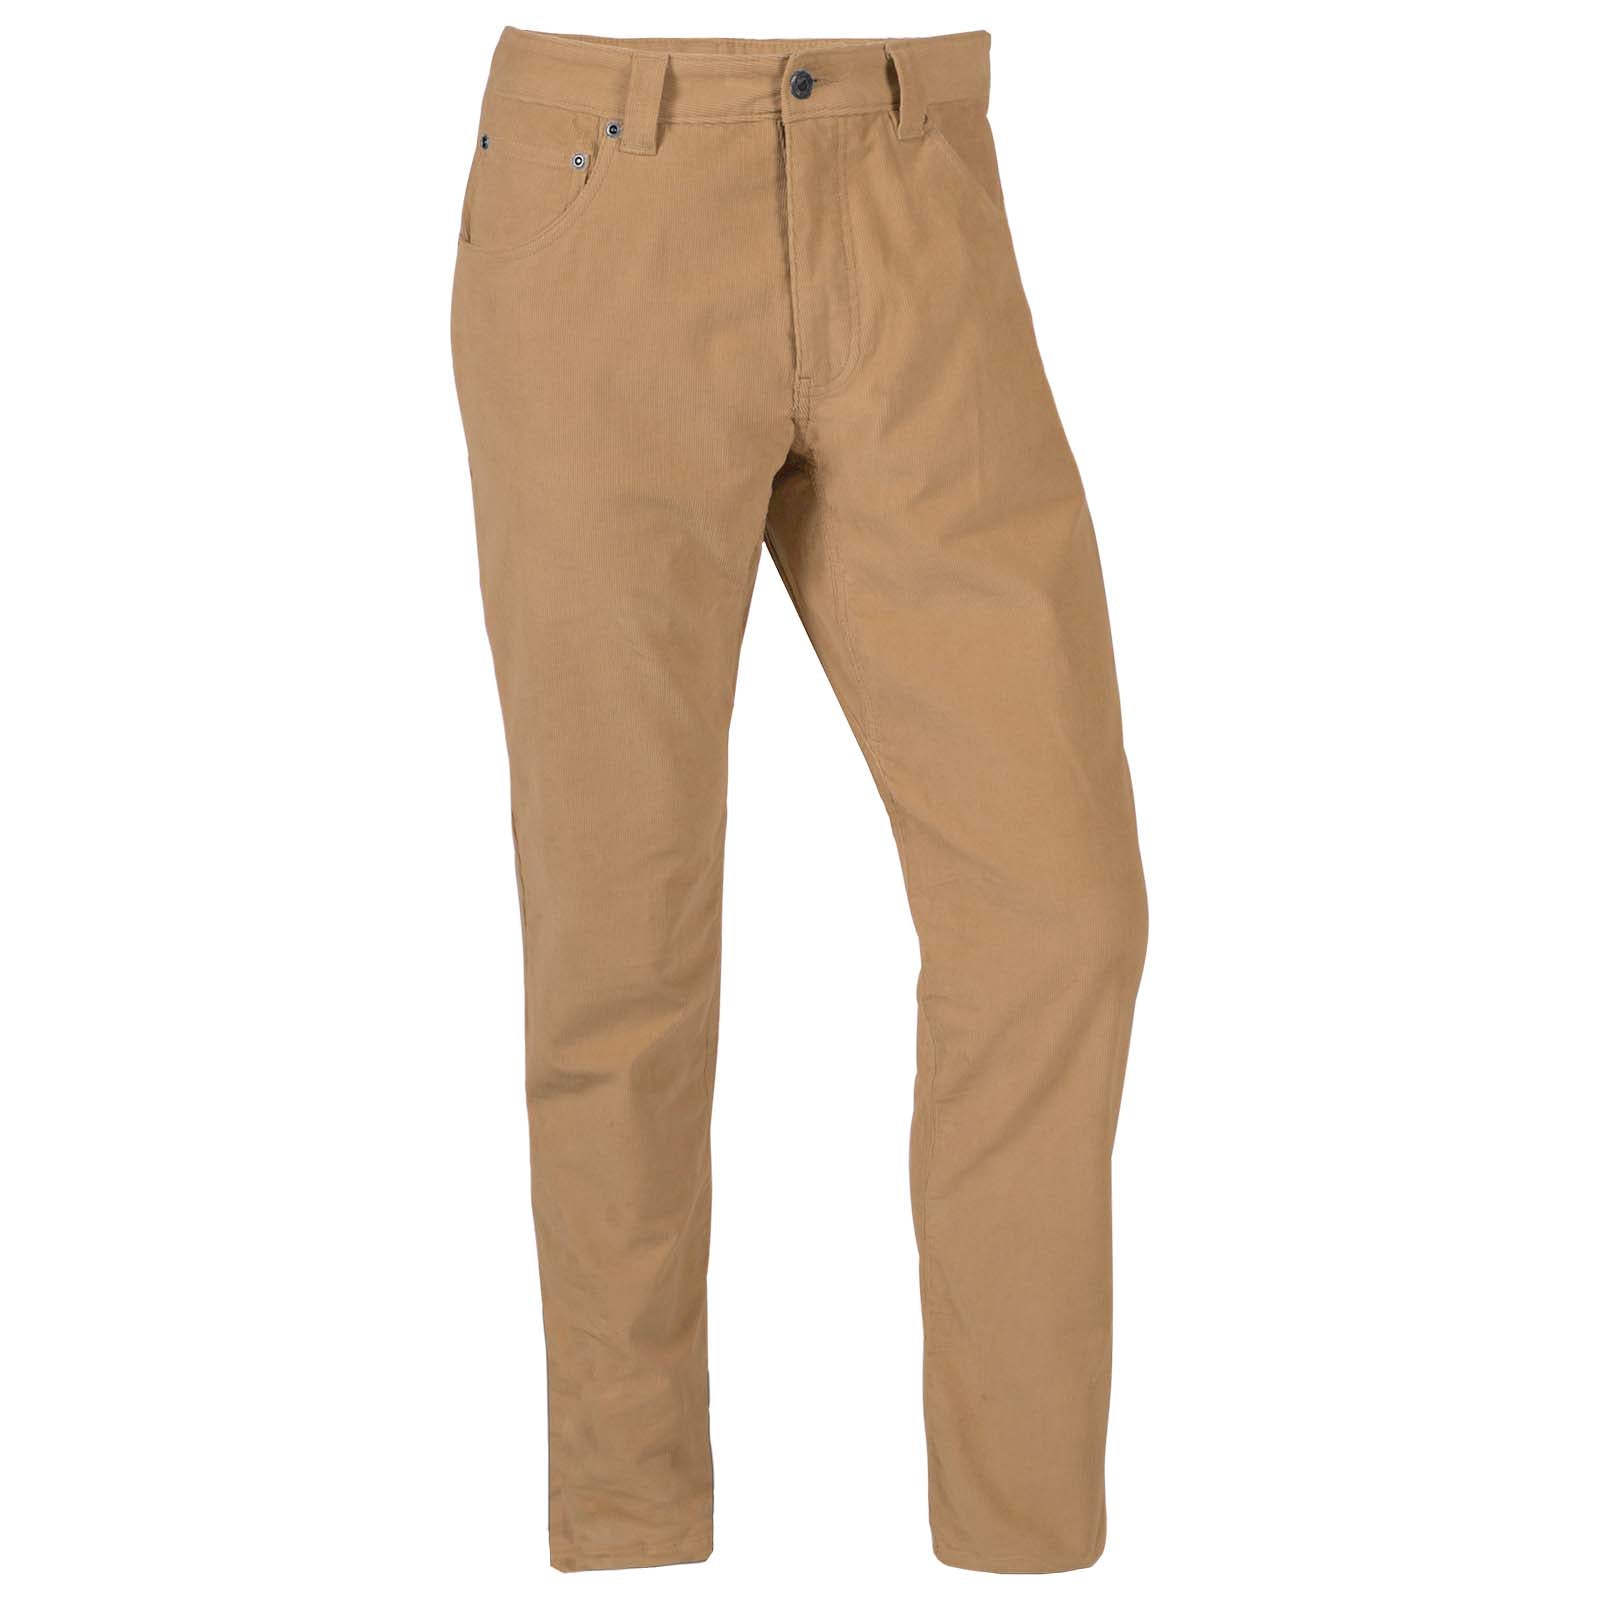 Buy Peter England Men Khaki Solid Super Slim Fit Casual Trousers online